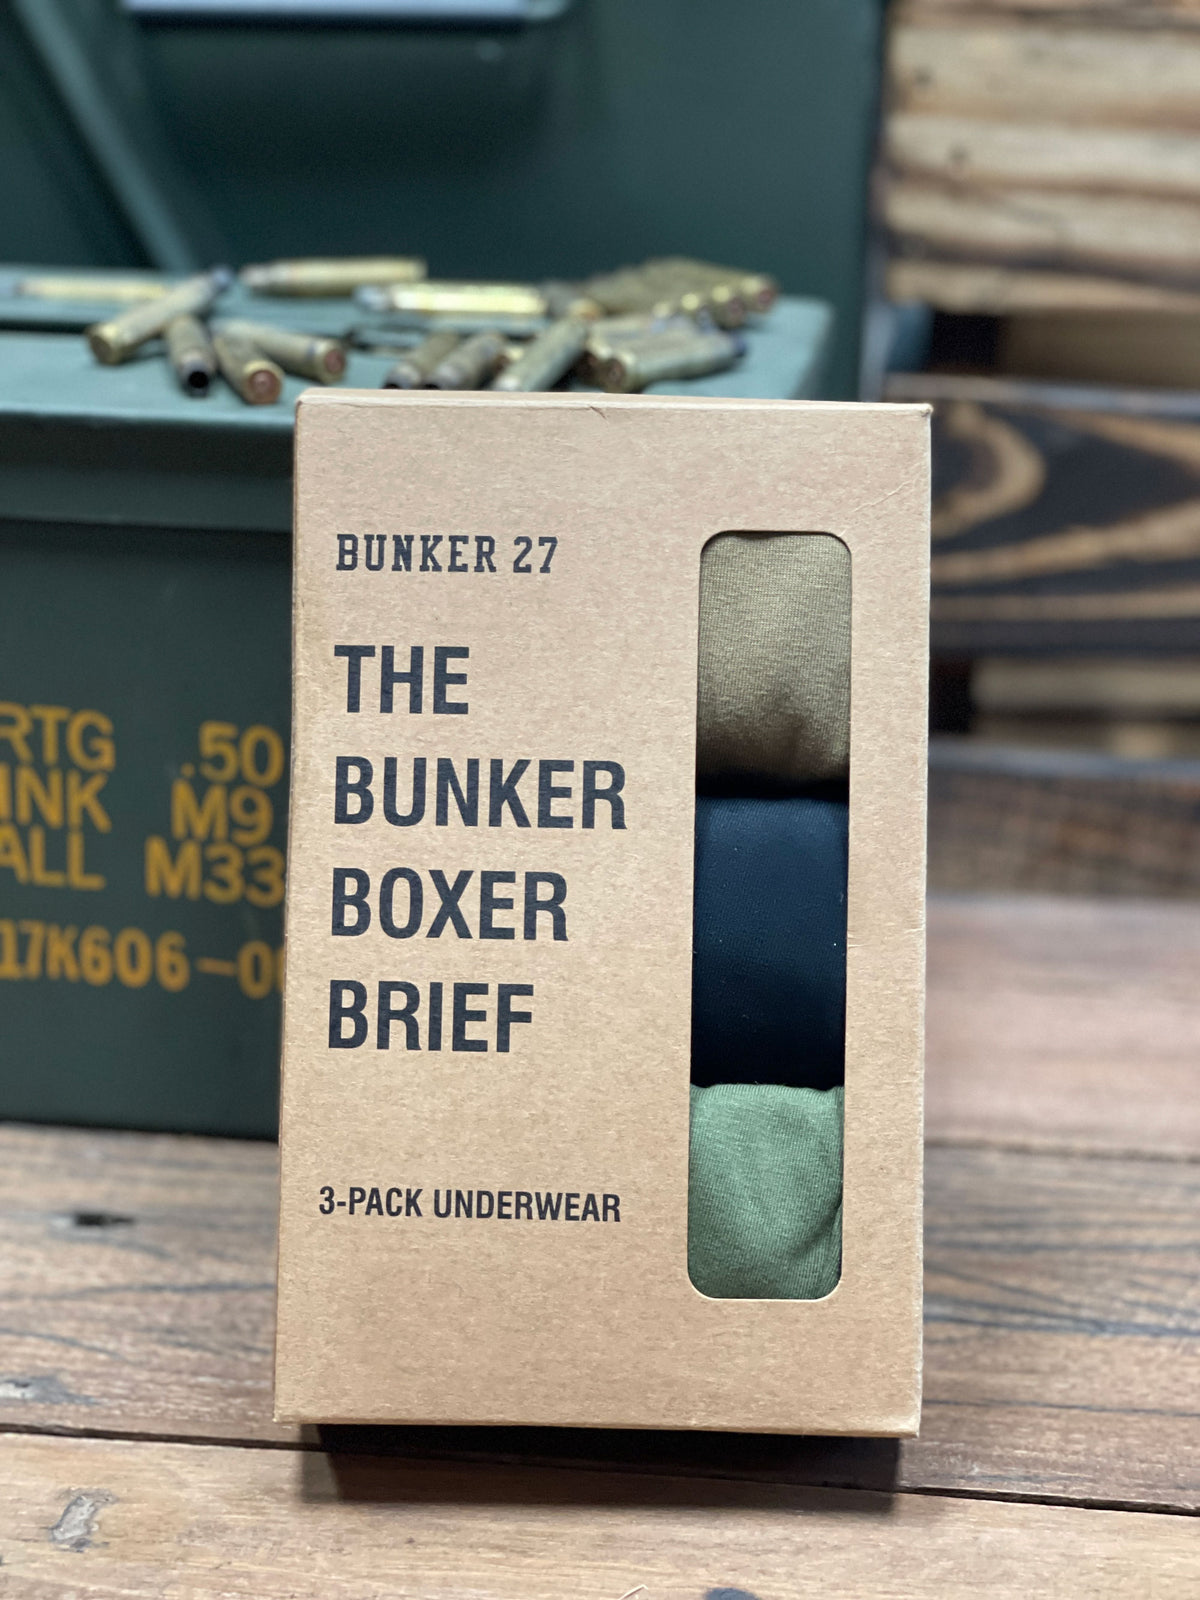 Underwear BUNKER Boxer Mens Pack 27 Brief 3 -